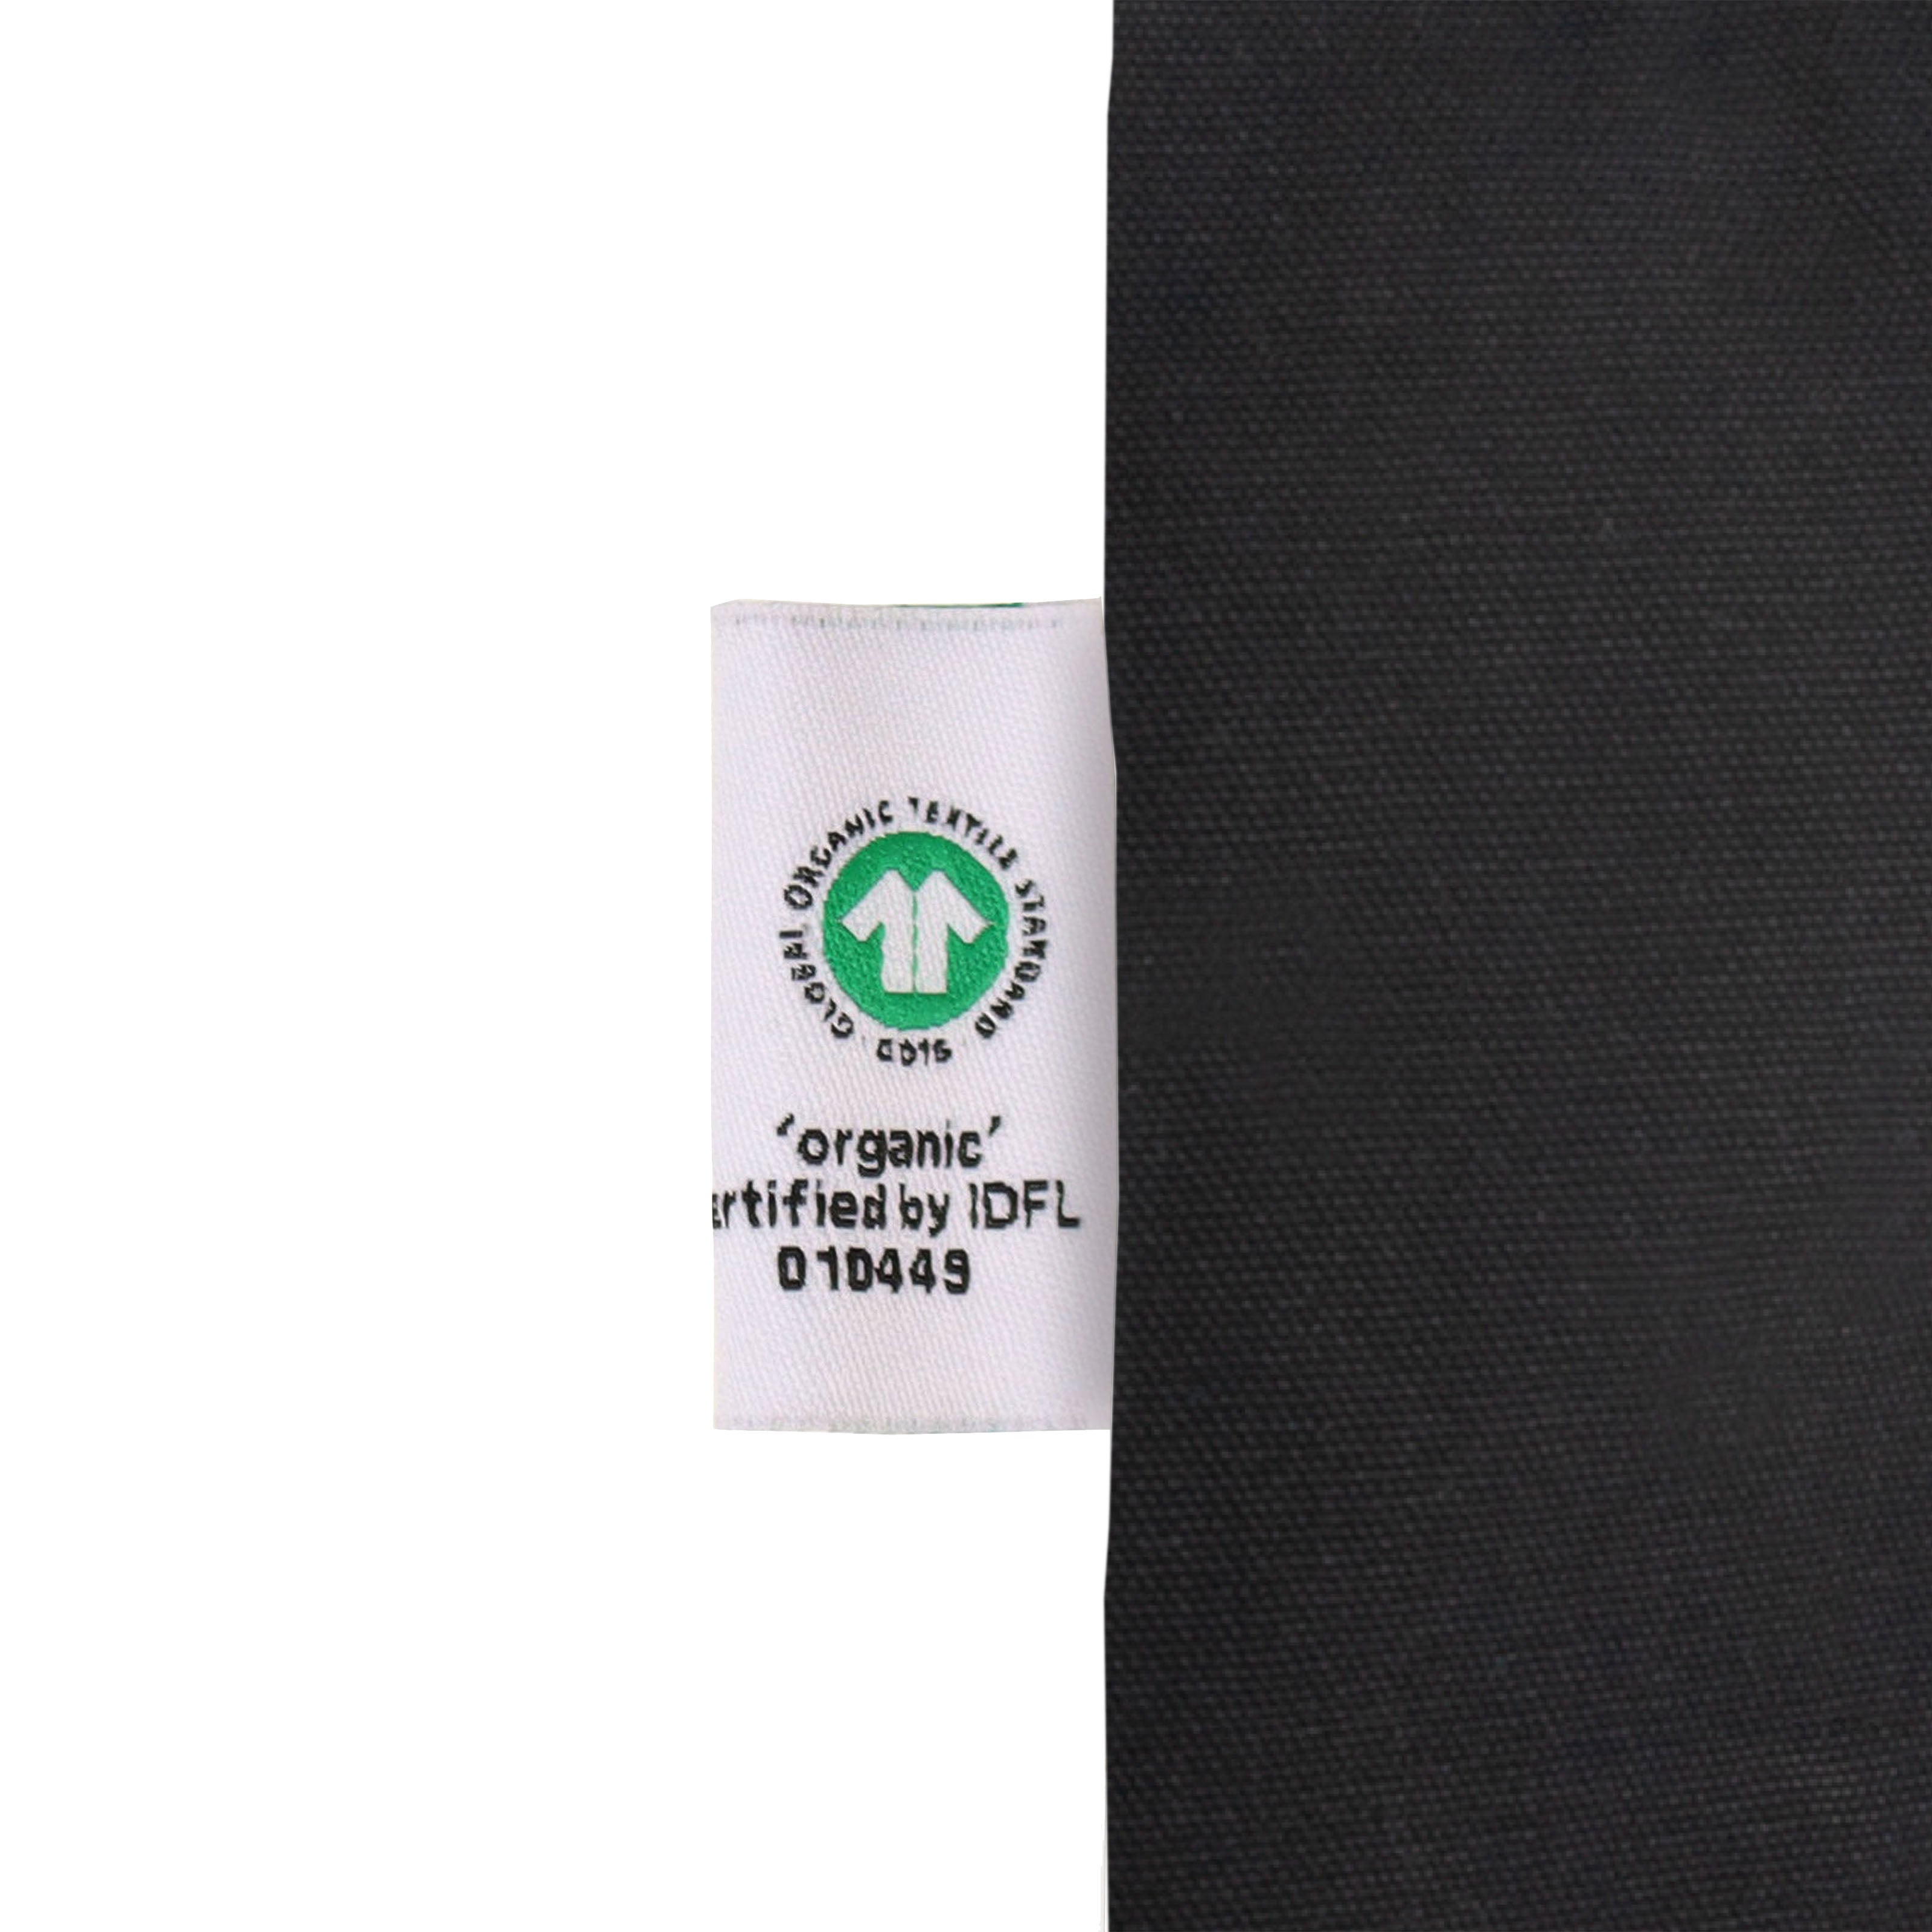 ECV-08B (Organic) Black Canvas Promotional Bag